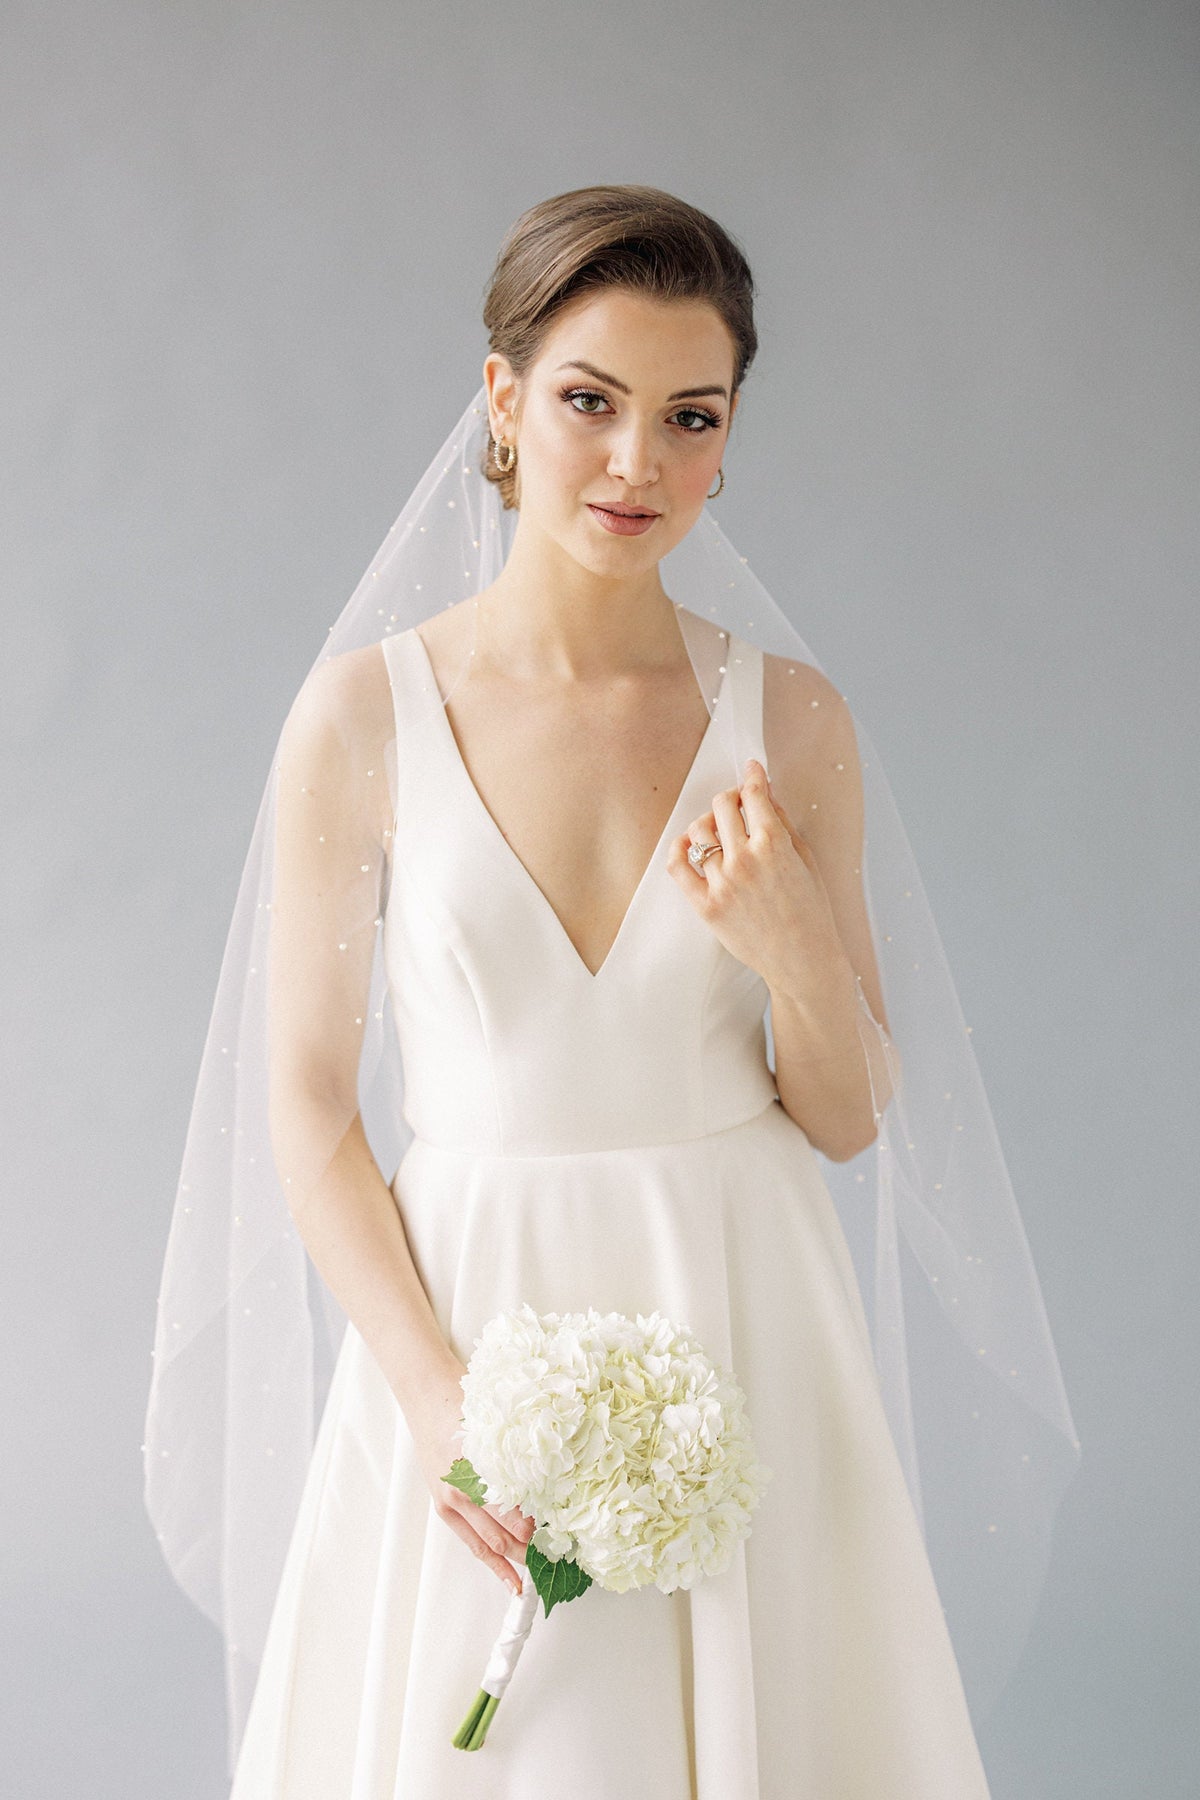 Bridal Veils Pearls Wedding Veil Waltz Length Comb Veil Scattered Pearls